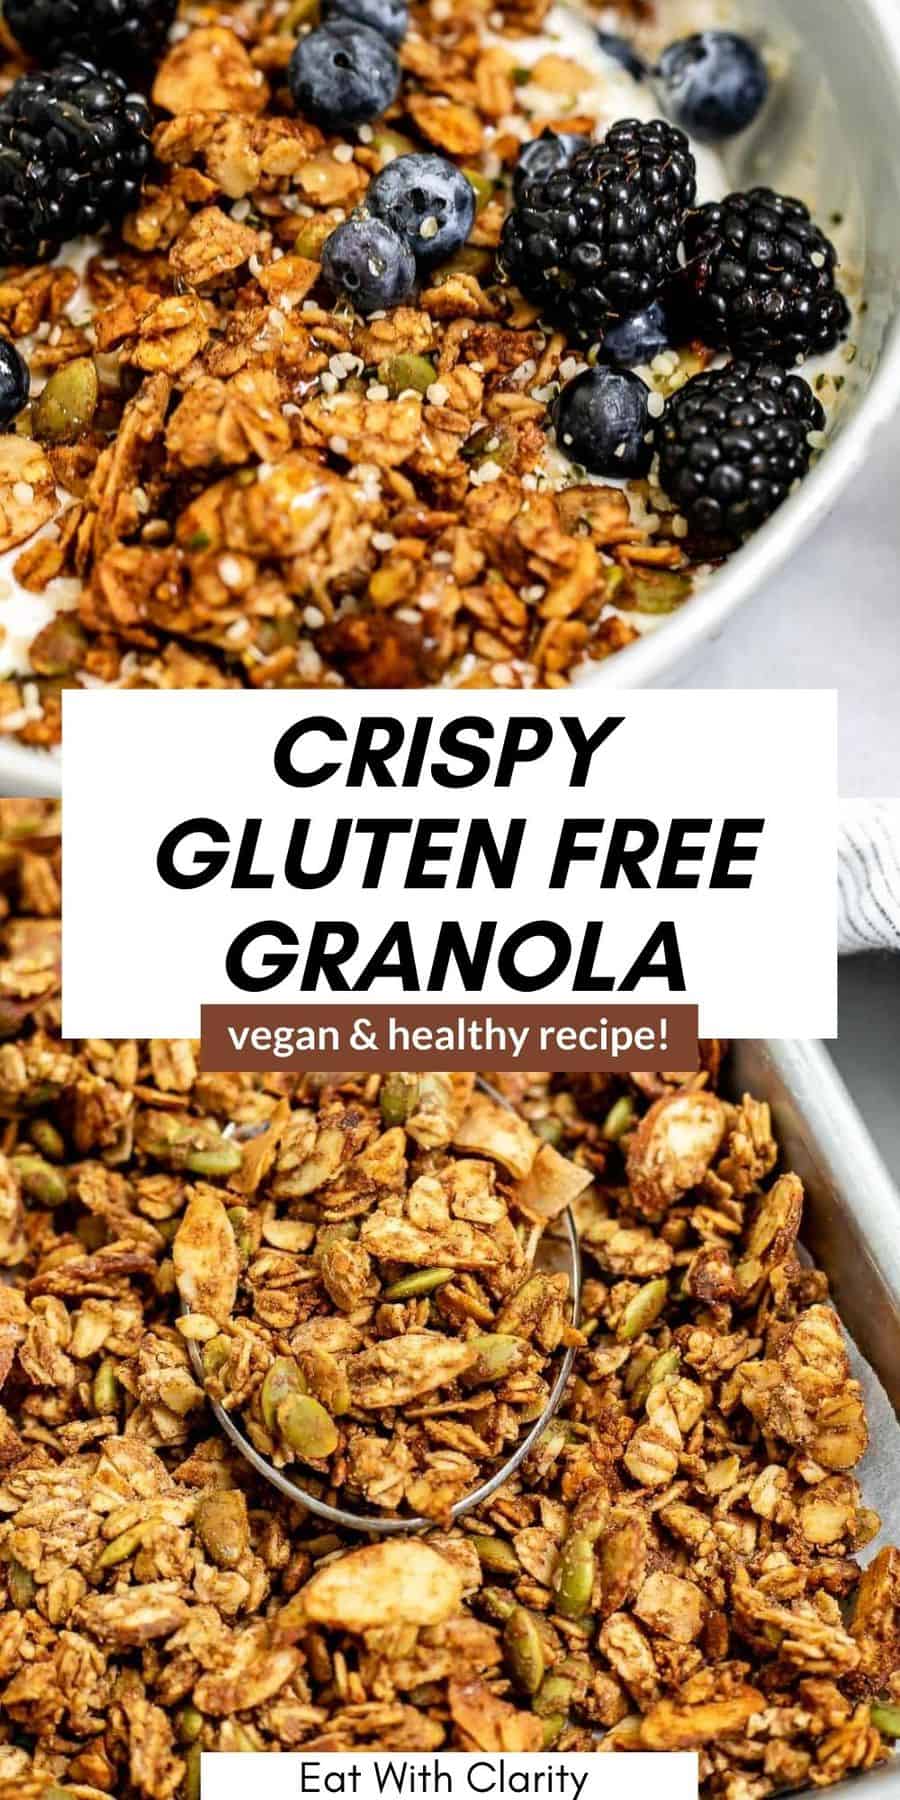 Crispy & Healthy Gluten Free Granola | Eat With Clarity Recipes